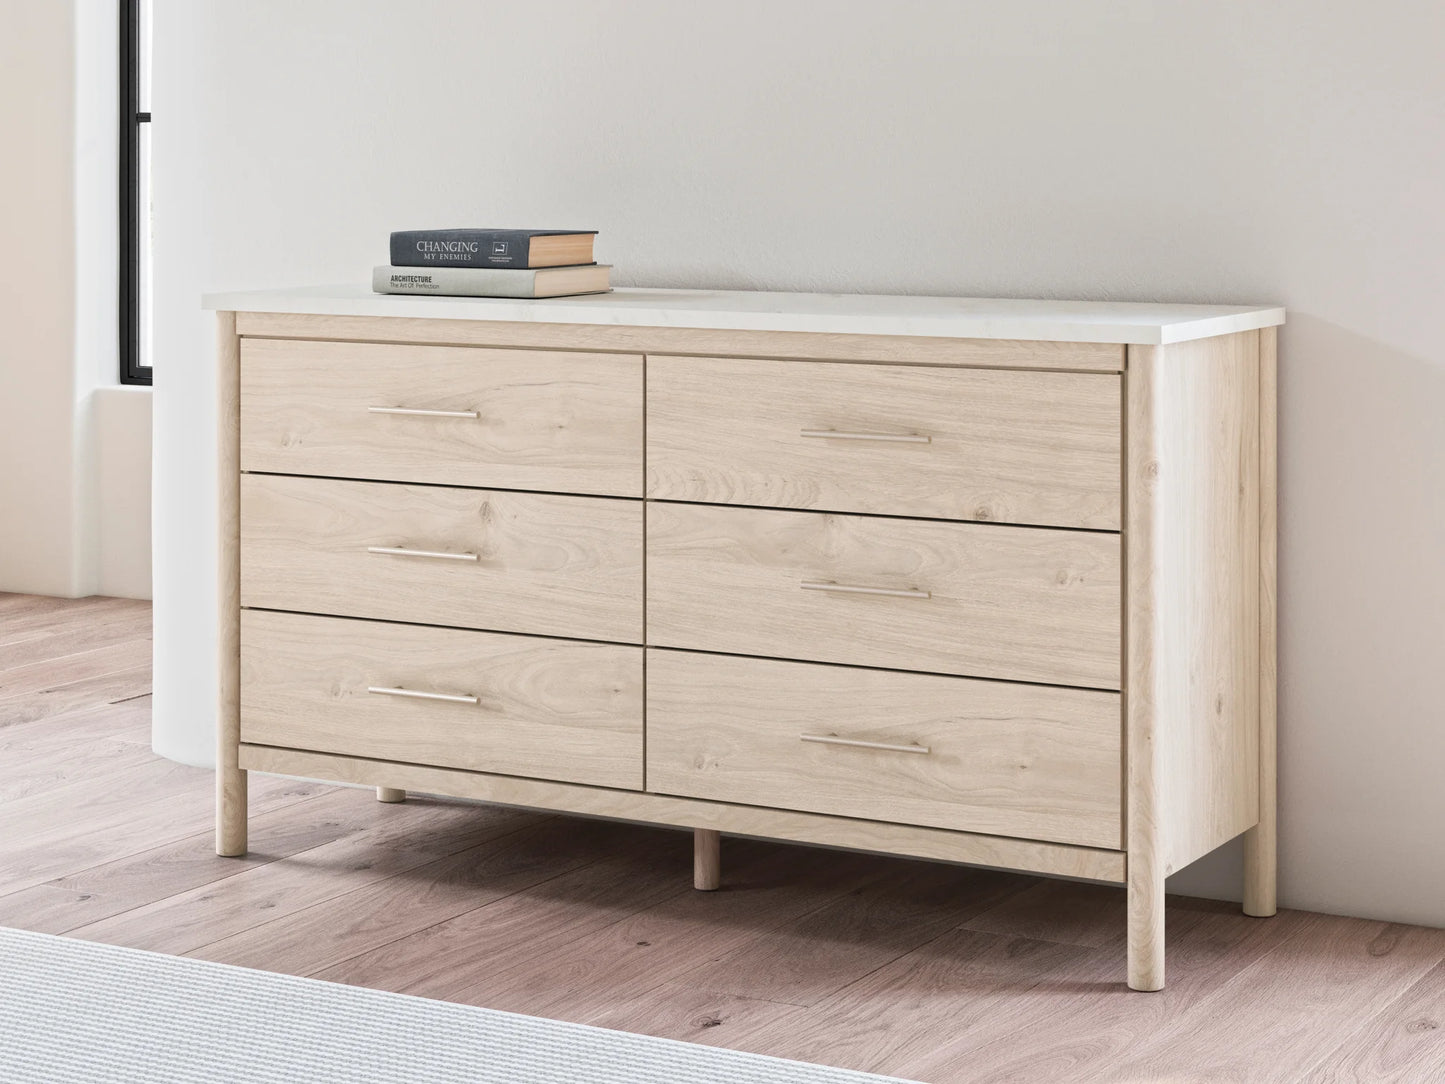 Cadmori - Two-tone - Six Drawer Dresser